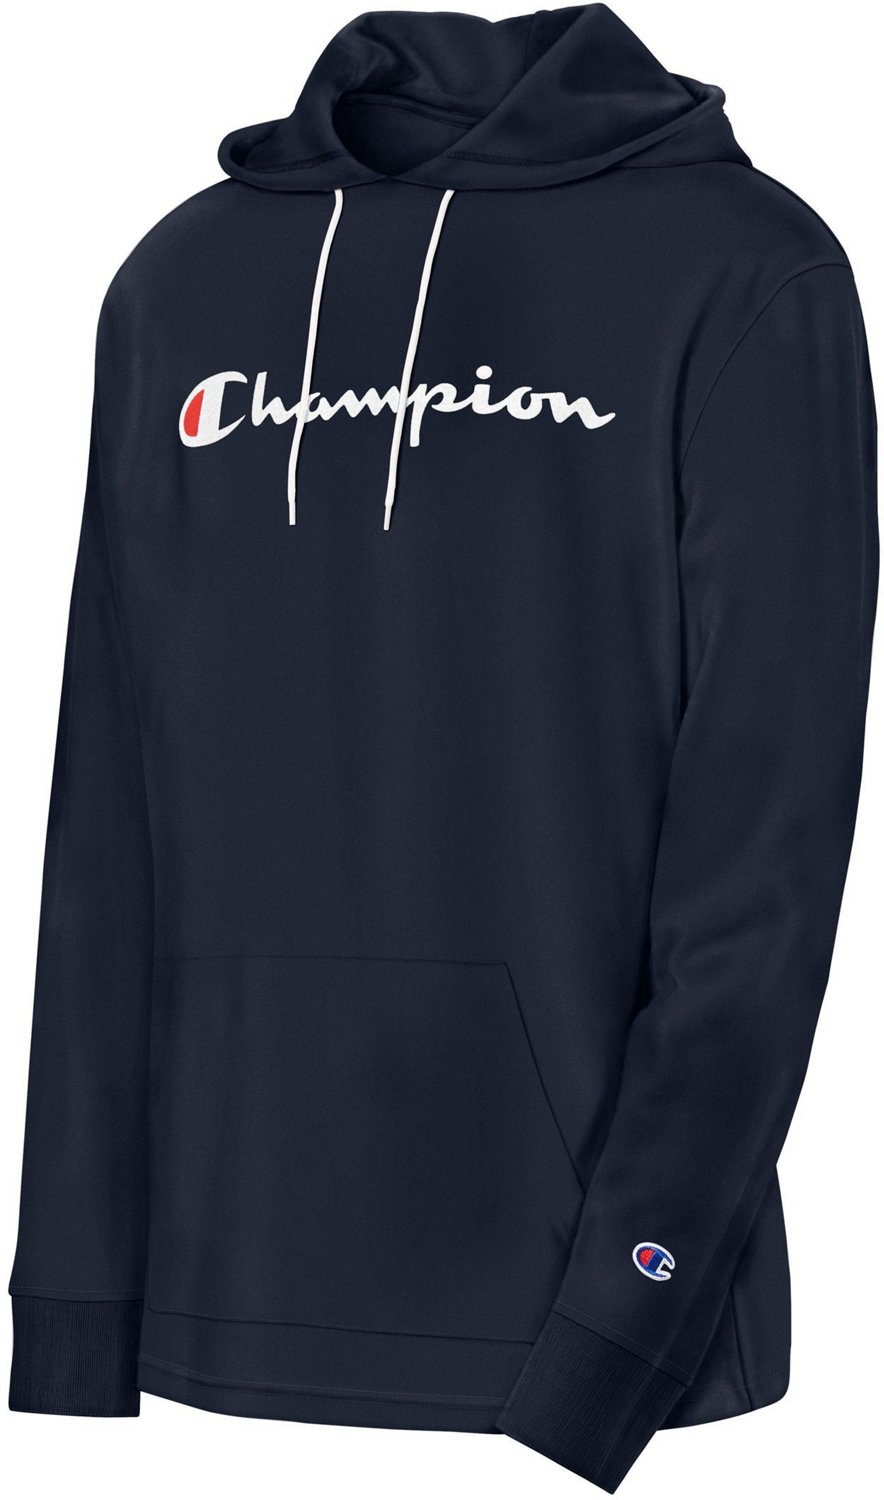 academy champion hoodies